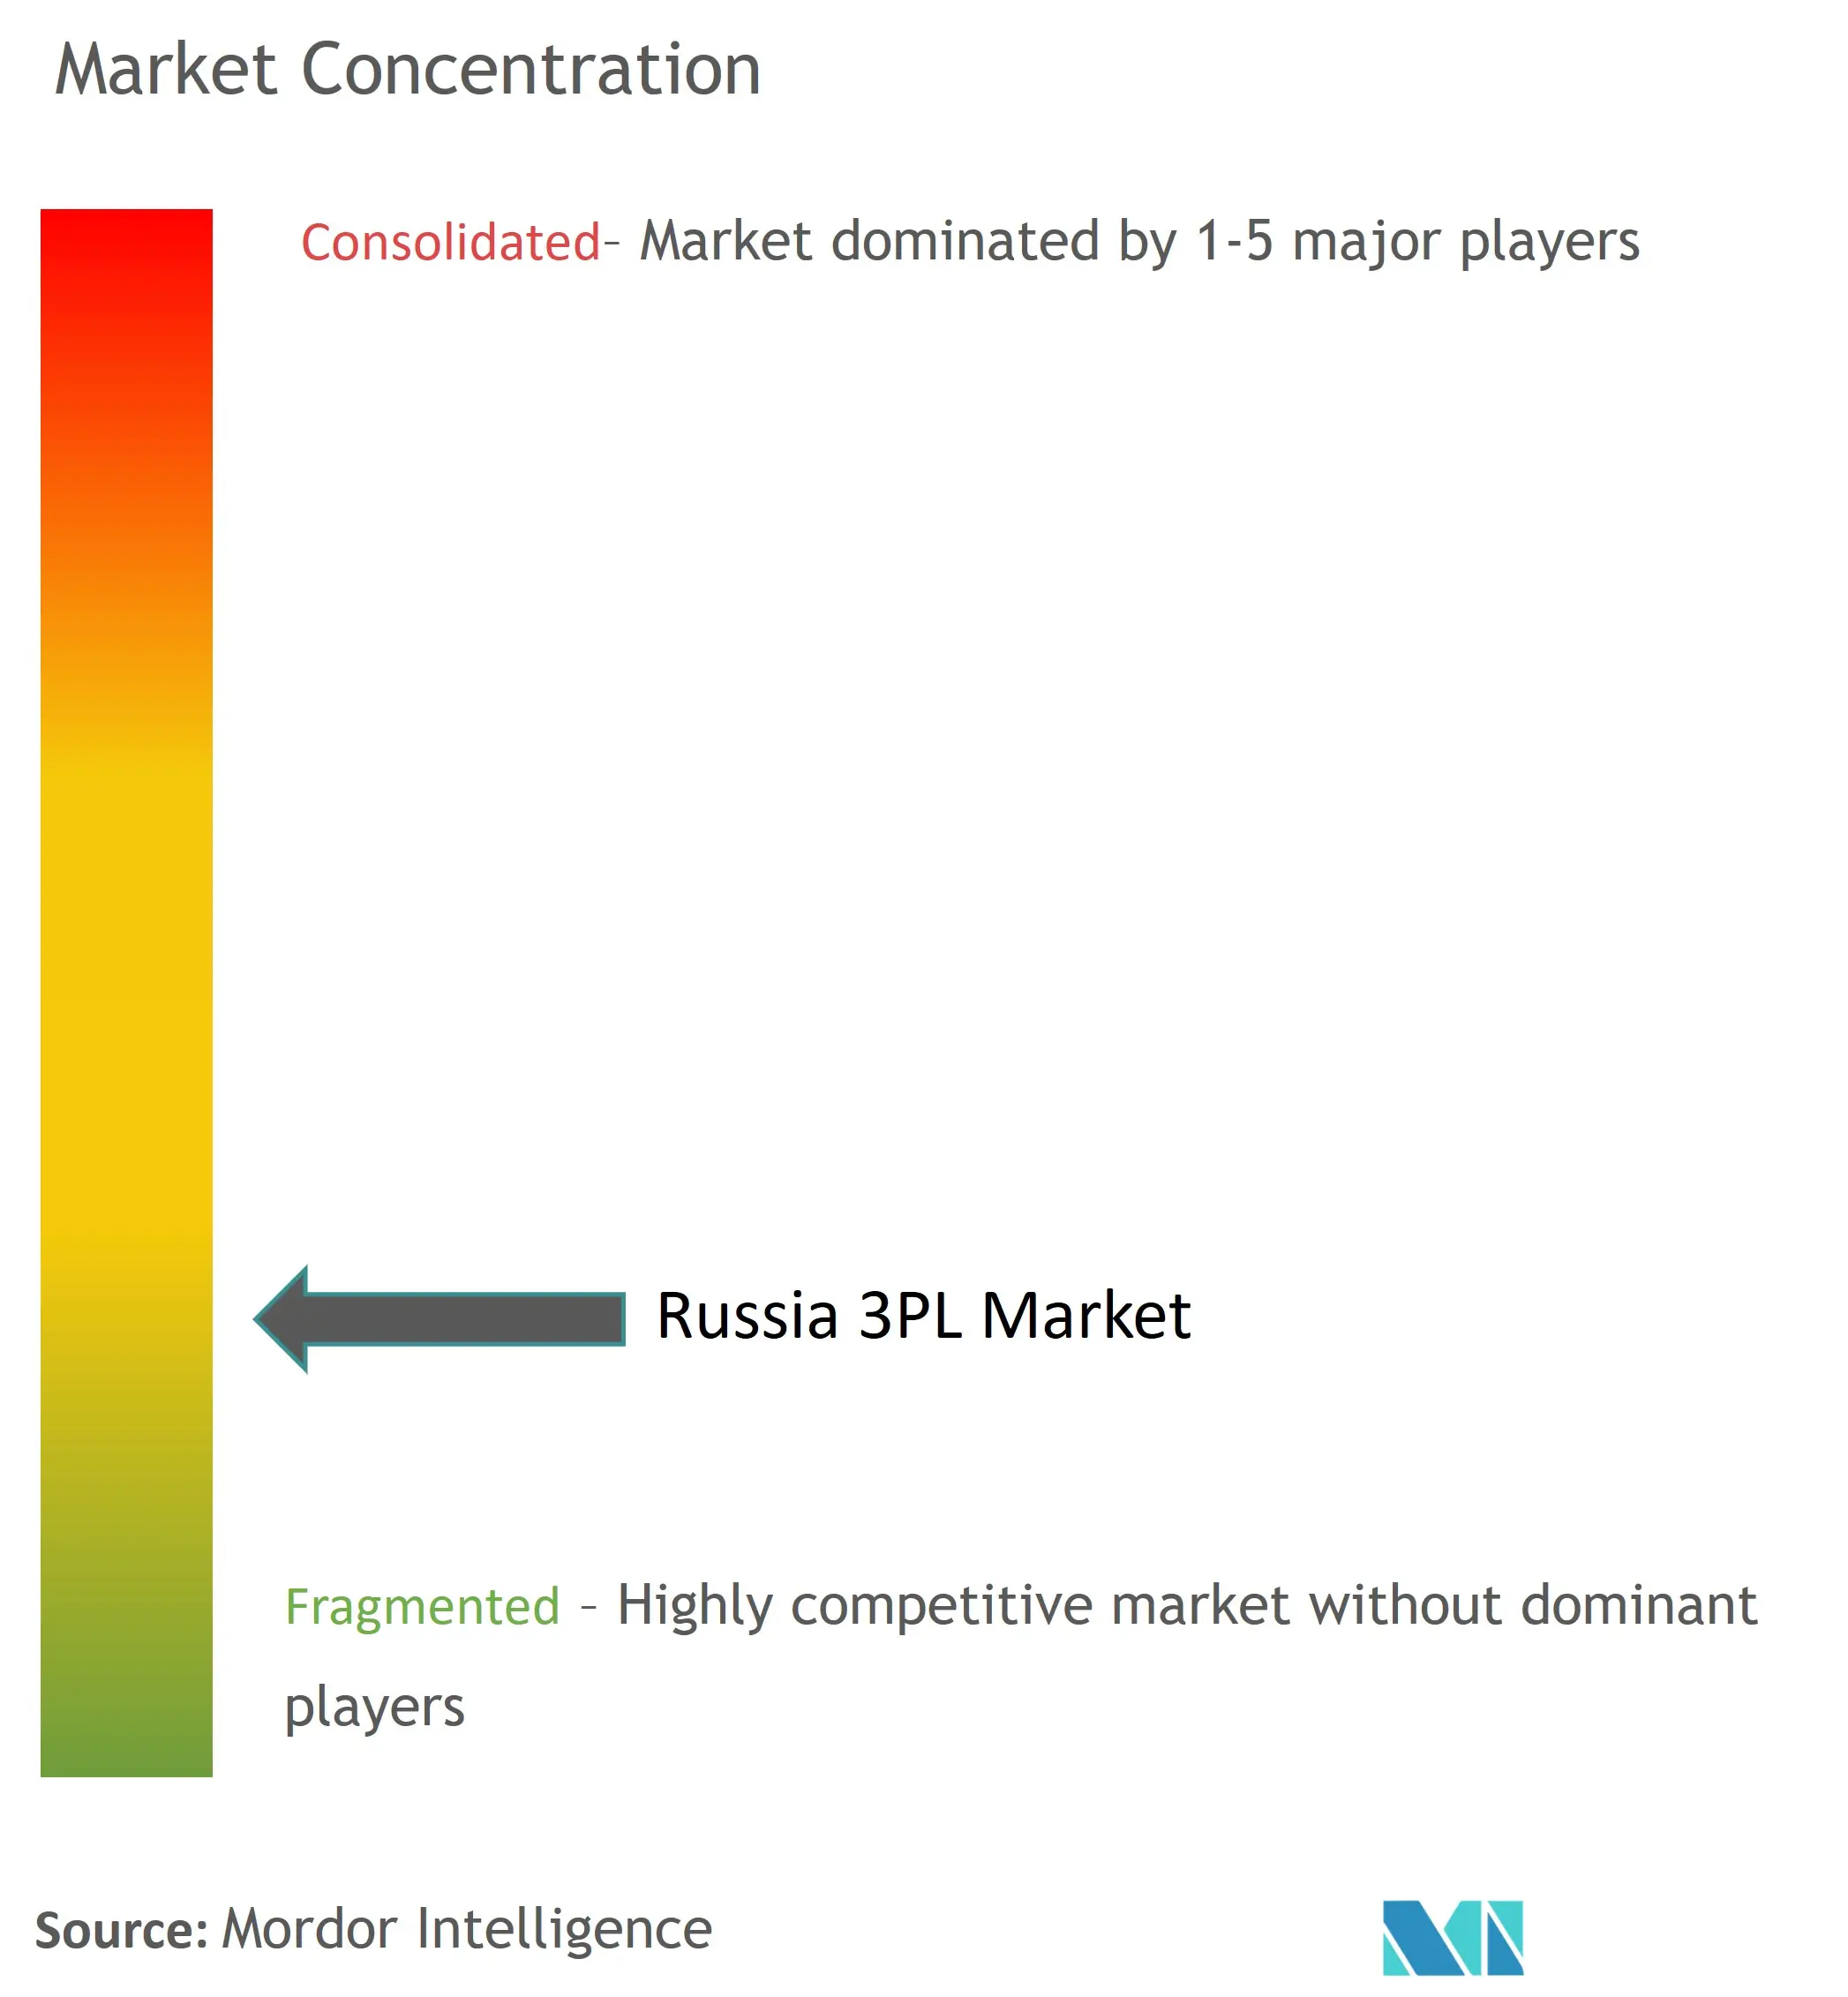 3PL-Marktkonzentration in Russland